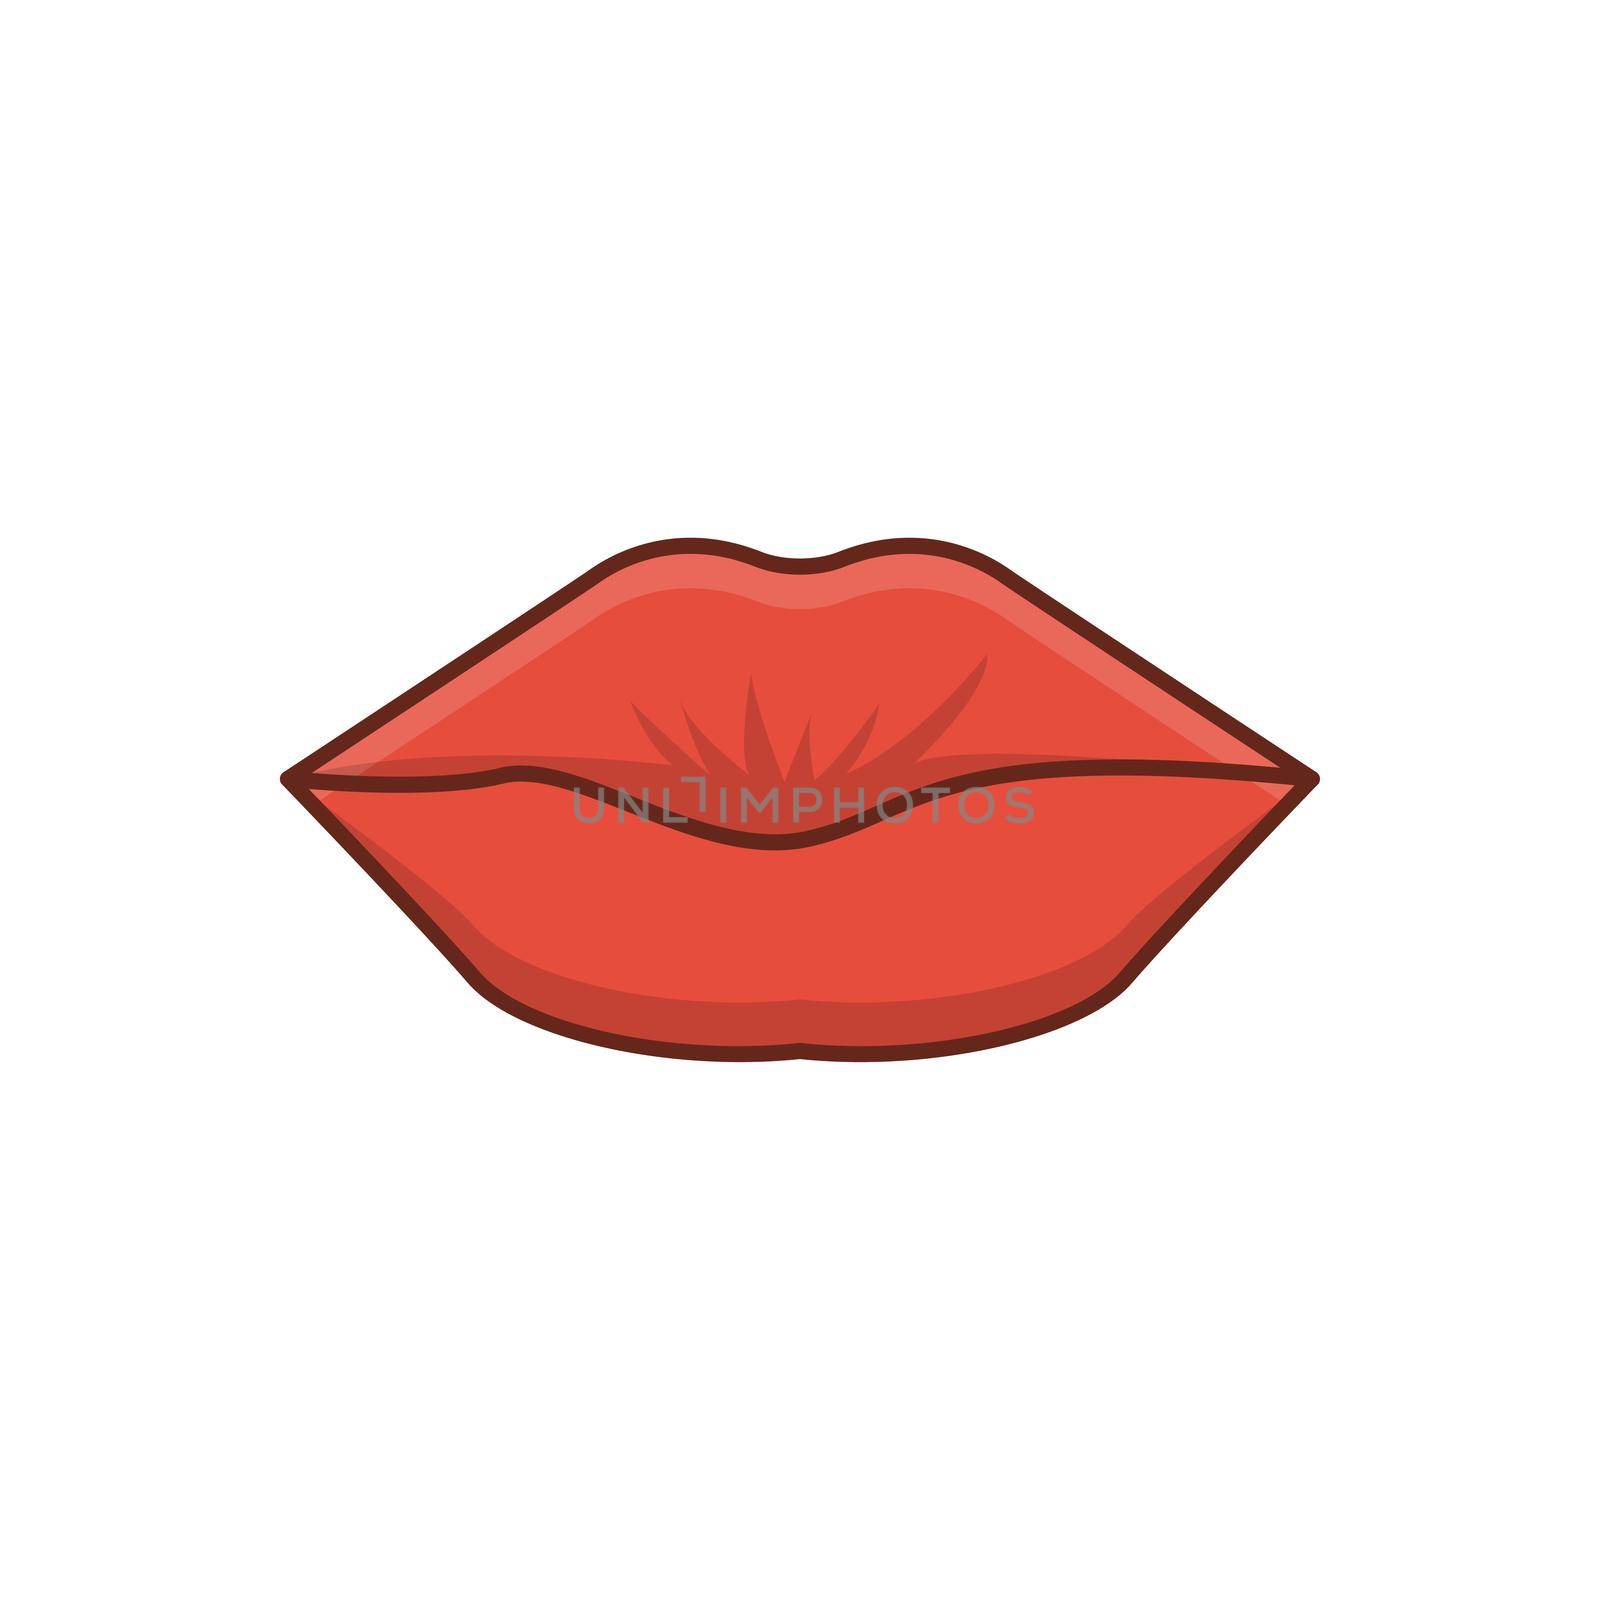 lipstick by FlaticonsDesign